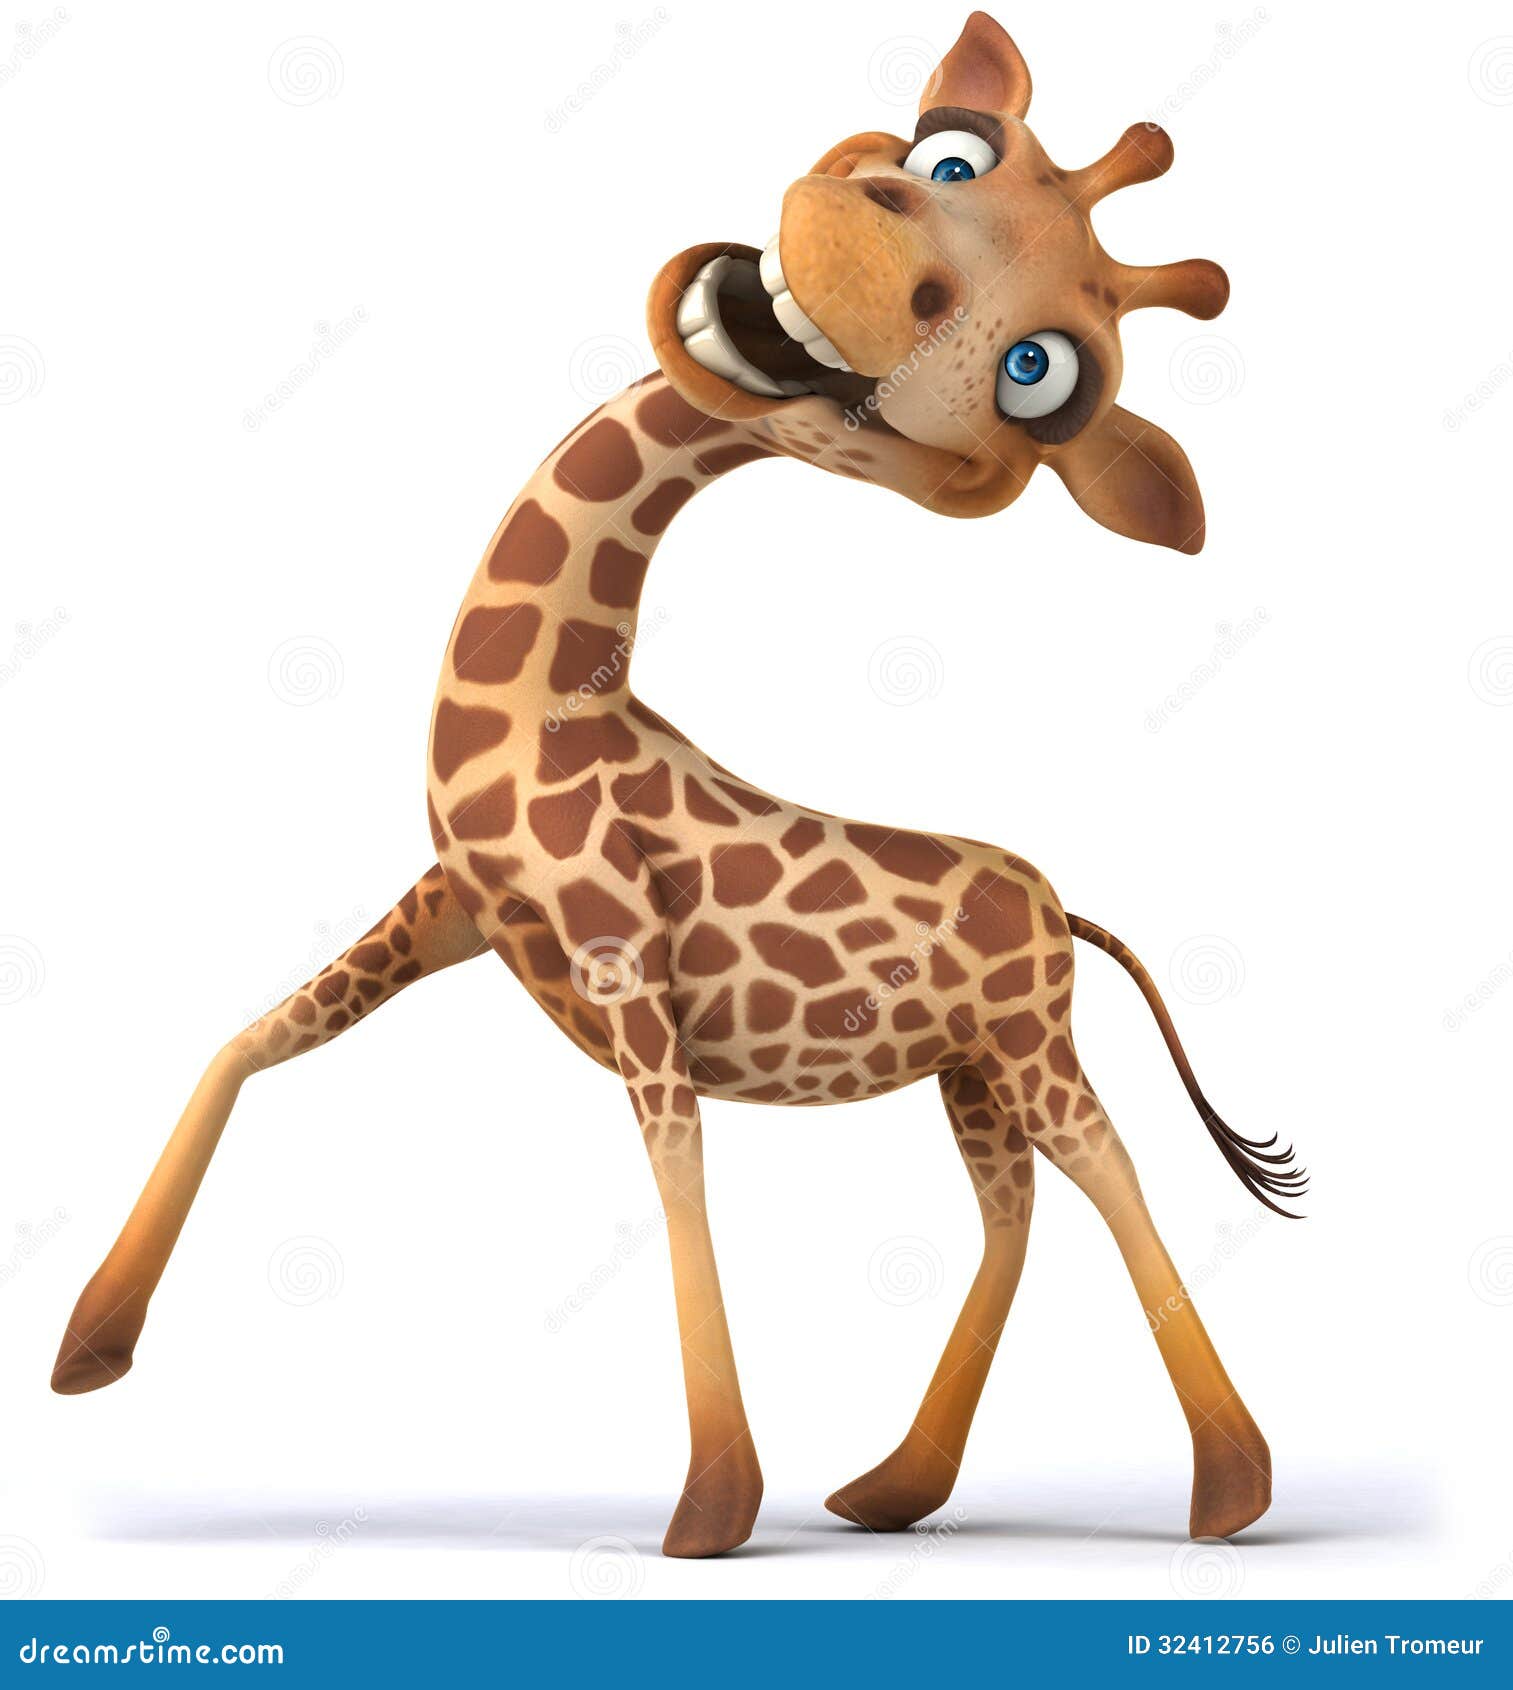 Fun giraffe stock illustration. Illustration of baby ...